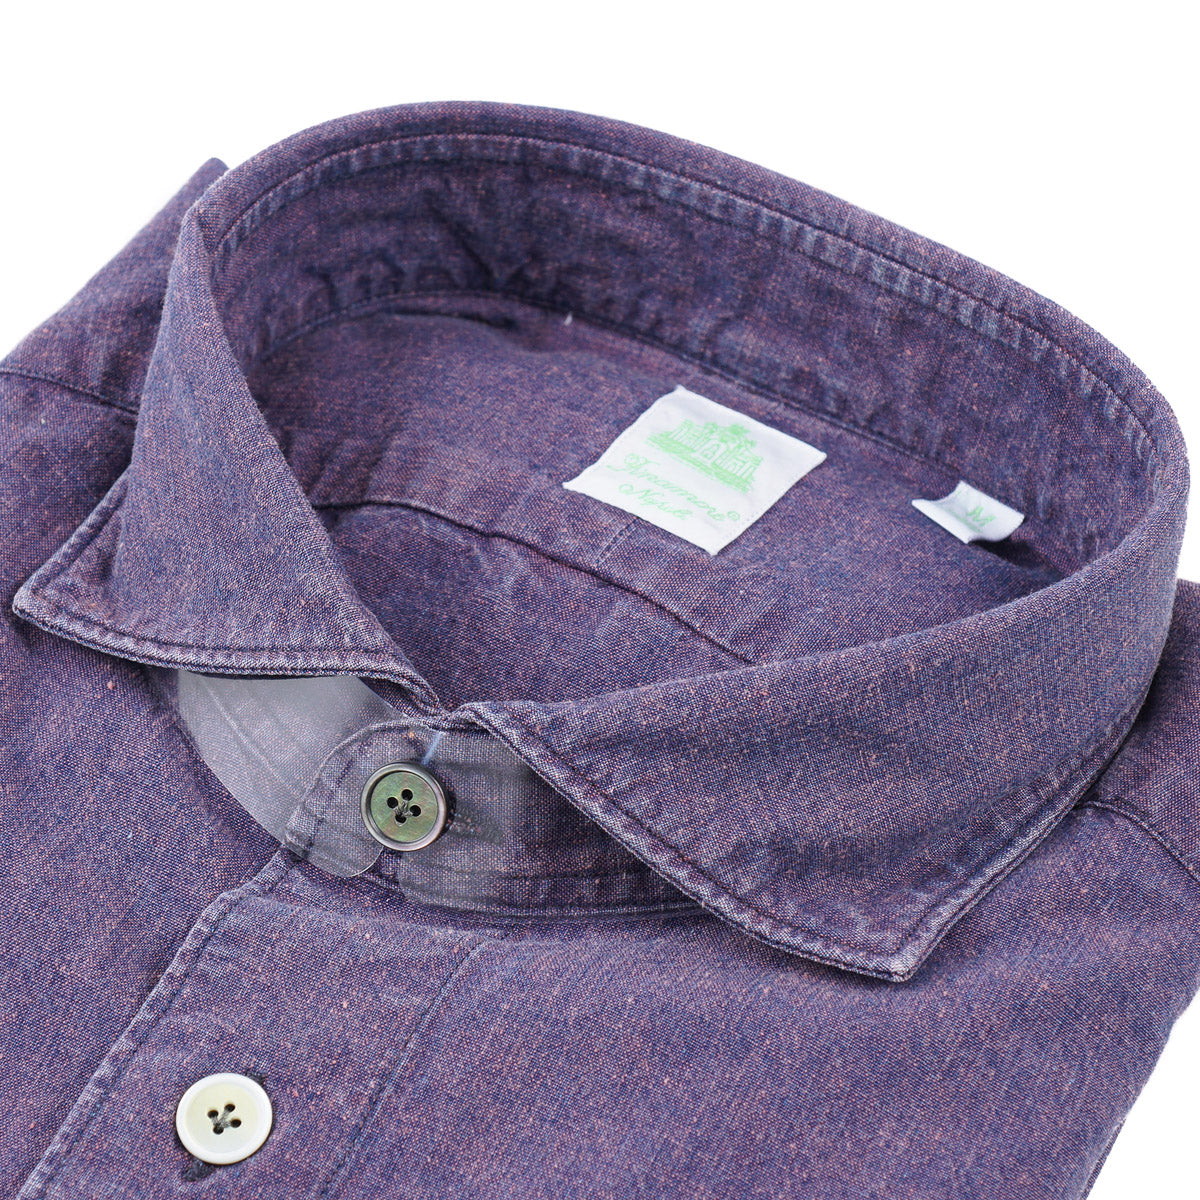 Finamore Overdyed Denim Cotton Shirt - Top Shelf Apparel